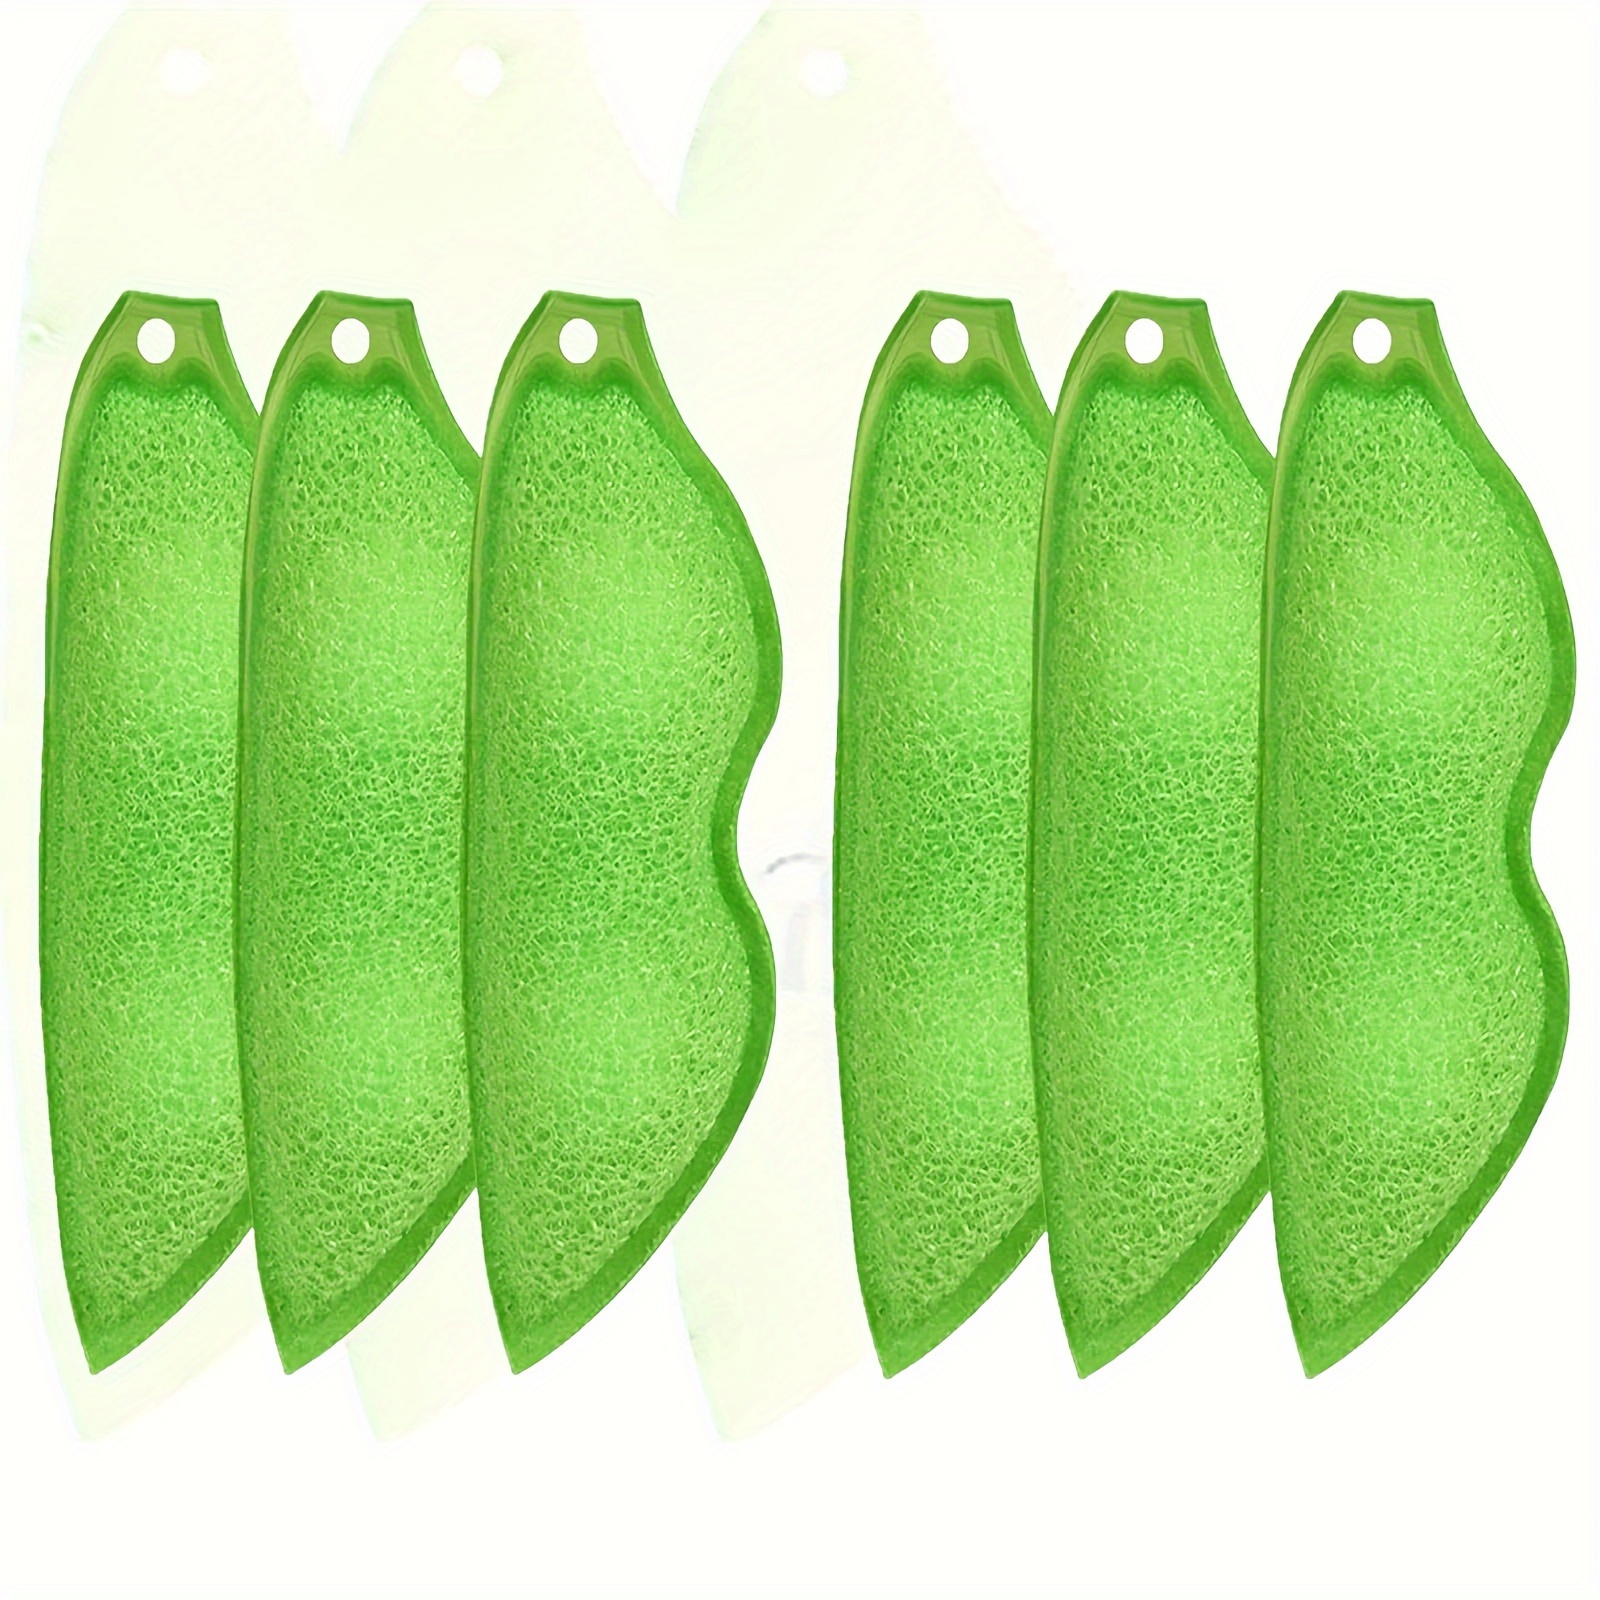 6pcs Green Beans Shaped Bottle Cleaning Sponge,Magic Beans Cleaner